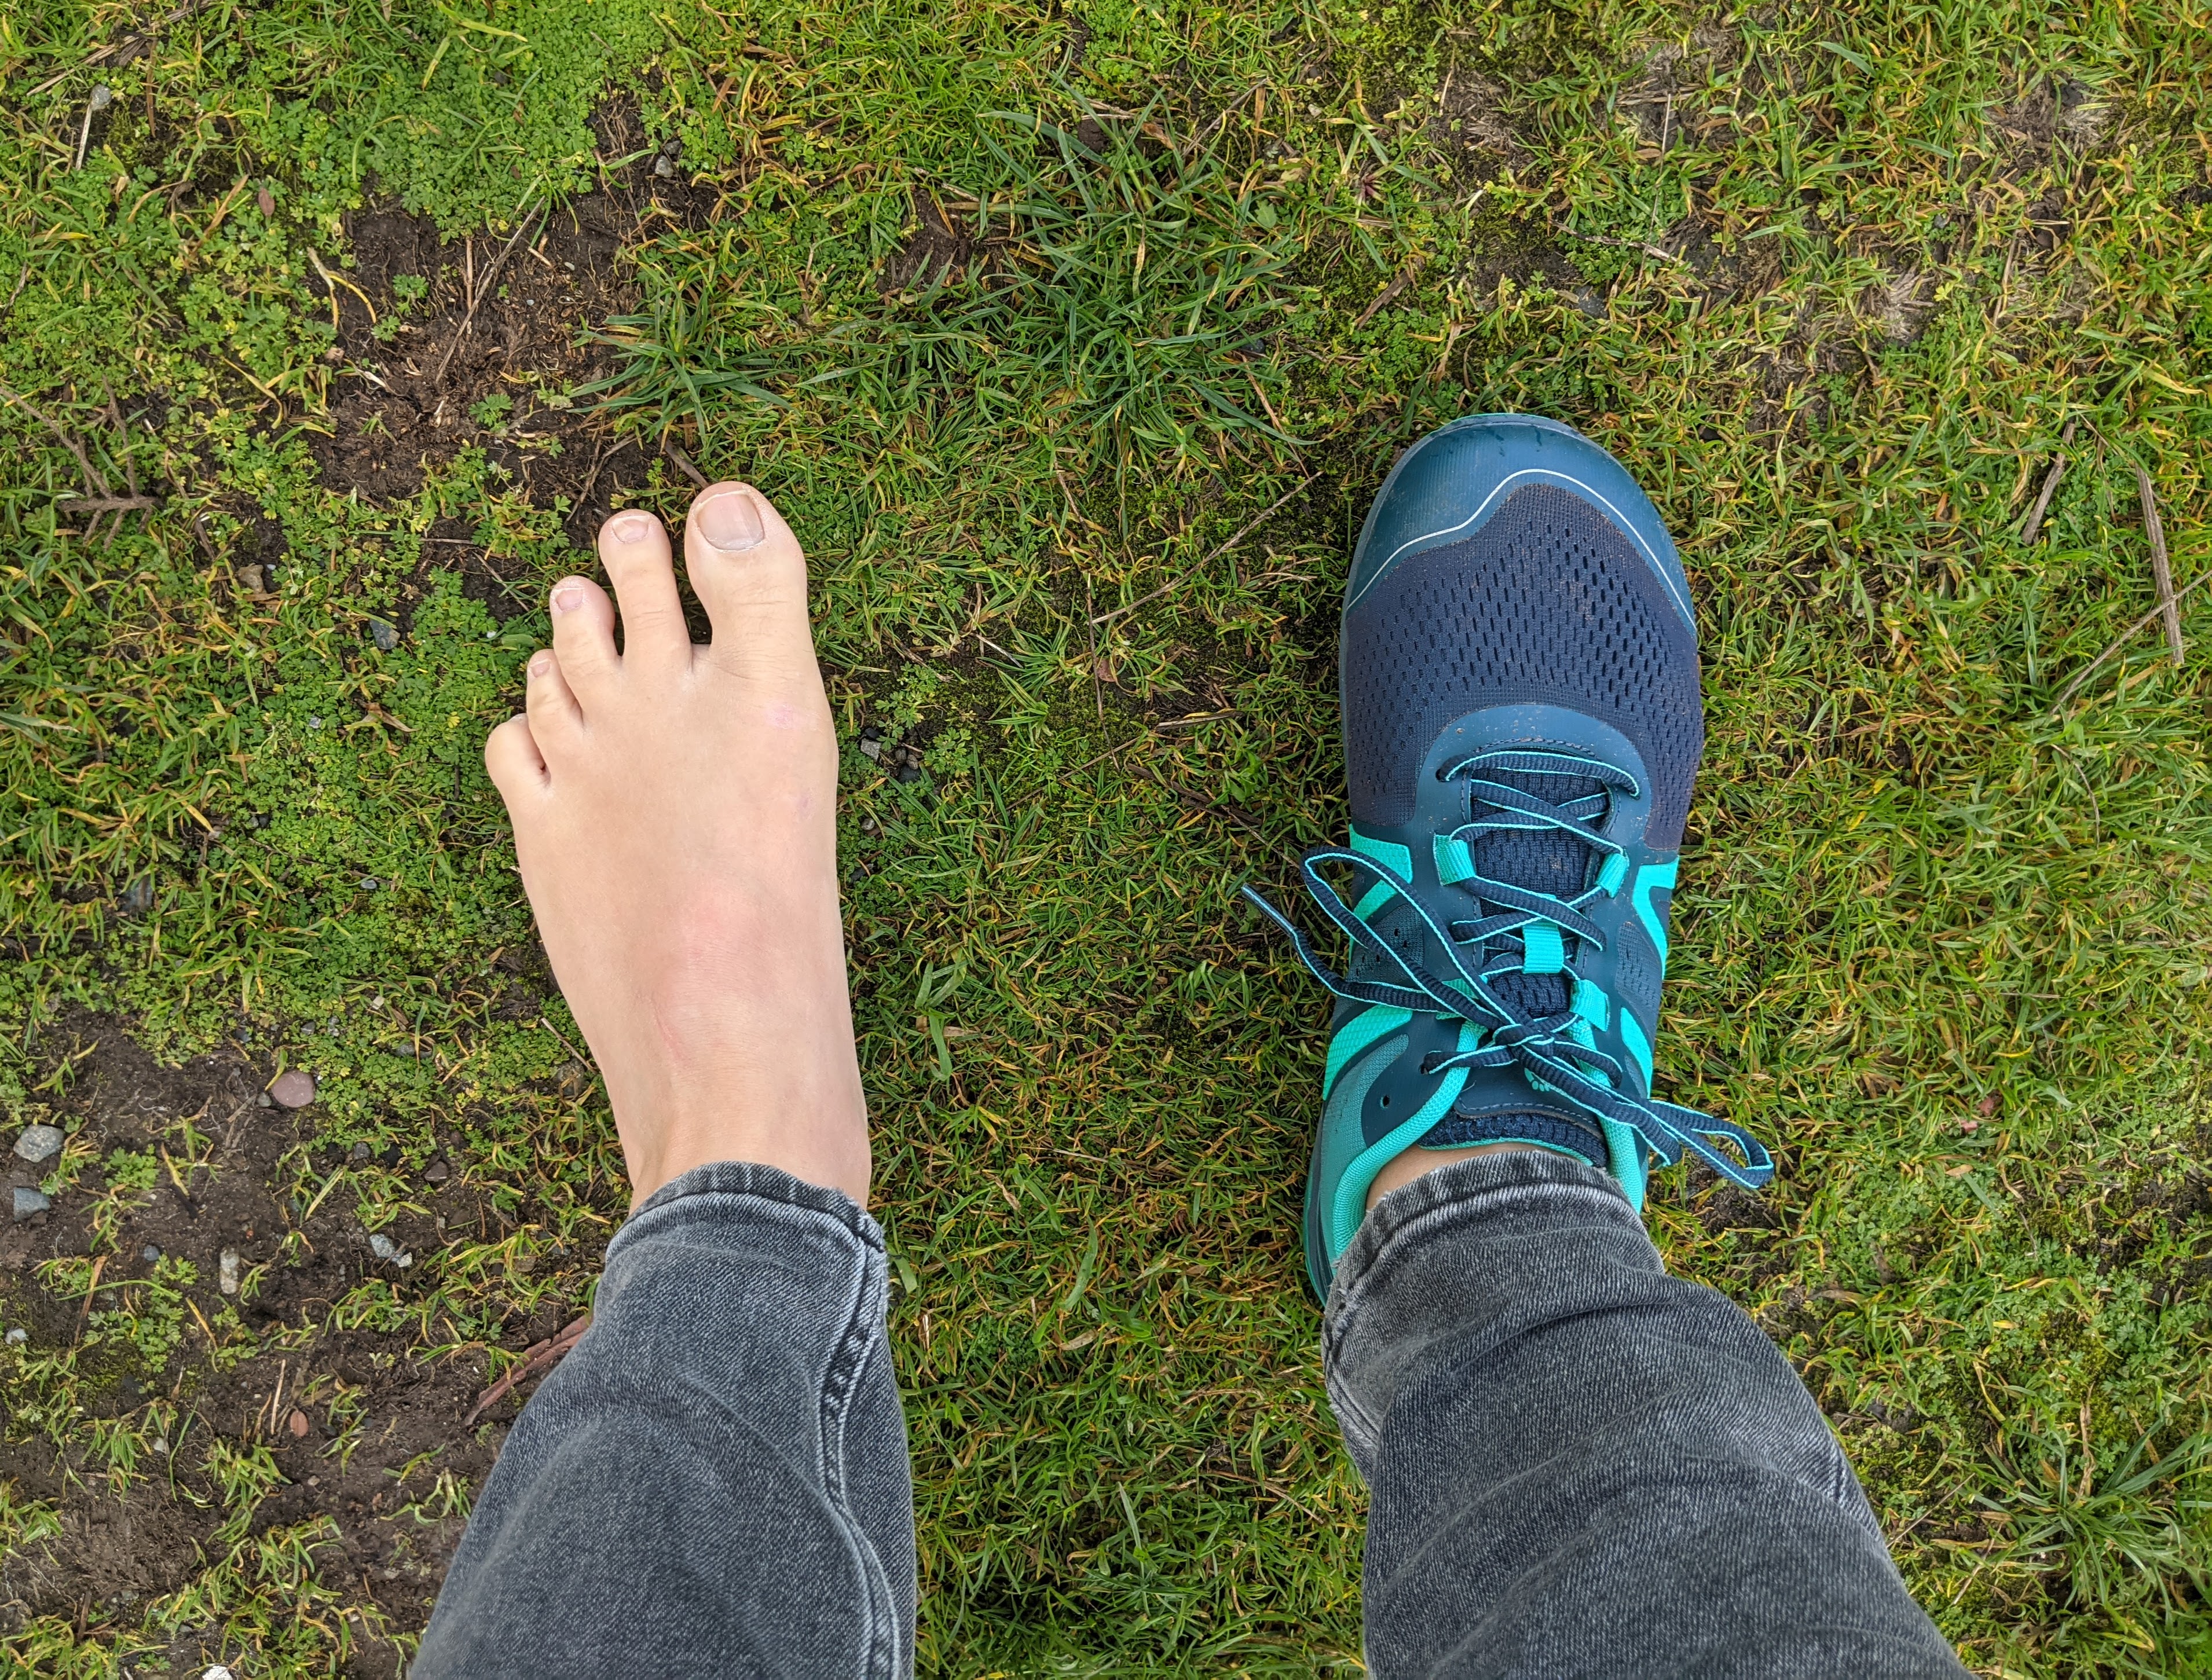 Barefoot Shoes & Minimalist Footwear Benefits, Cons: Experts Explain